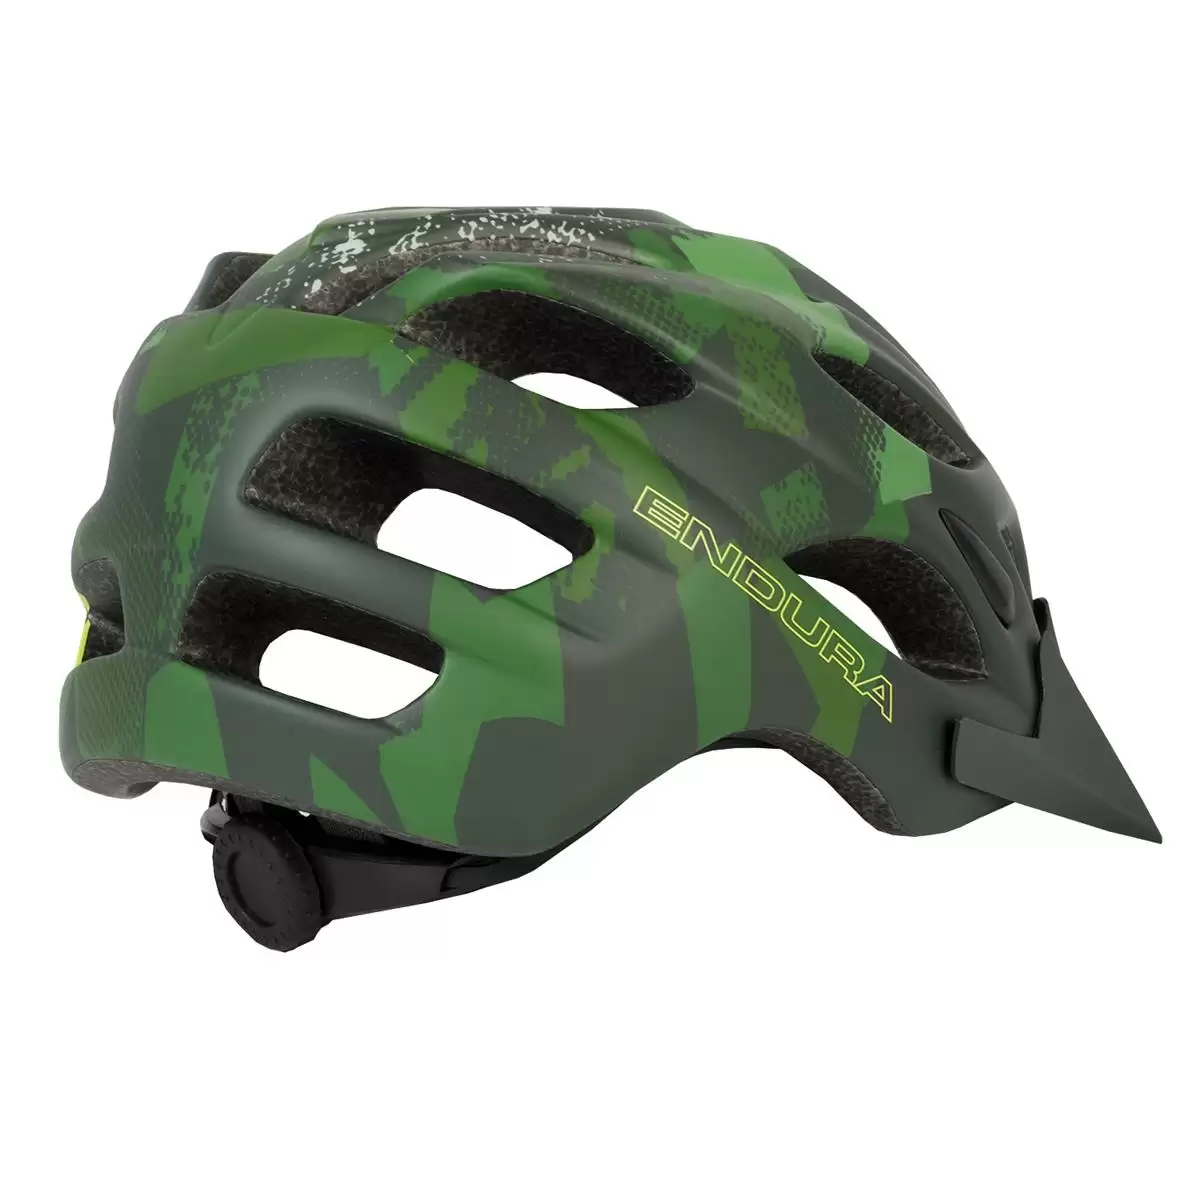 Hummvee helmet Khaki Green size S/M (51-56cm) #1